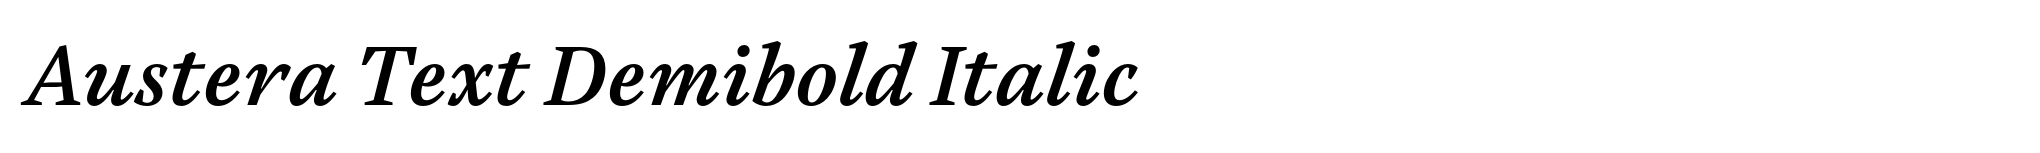 Austera Text Demibold Italic image